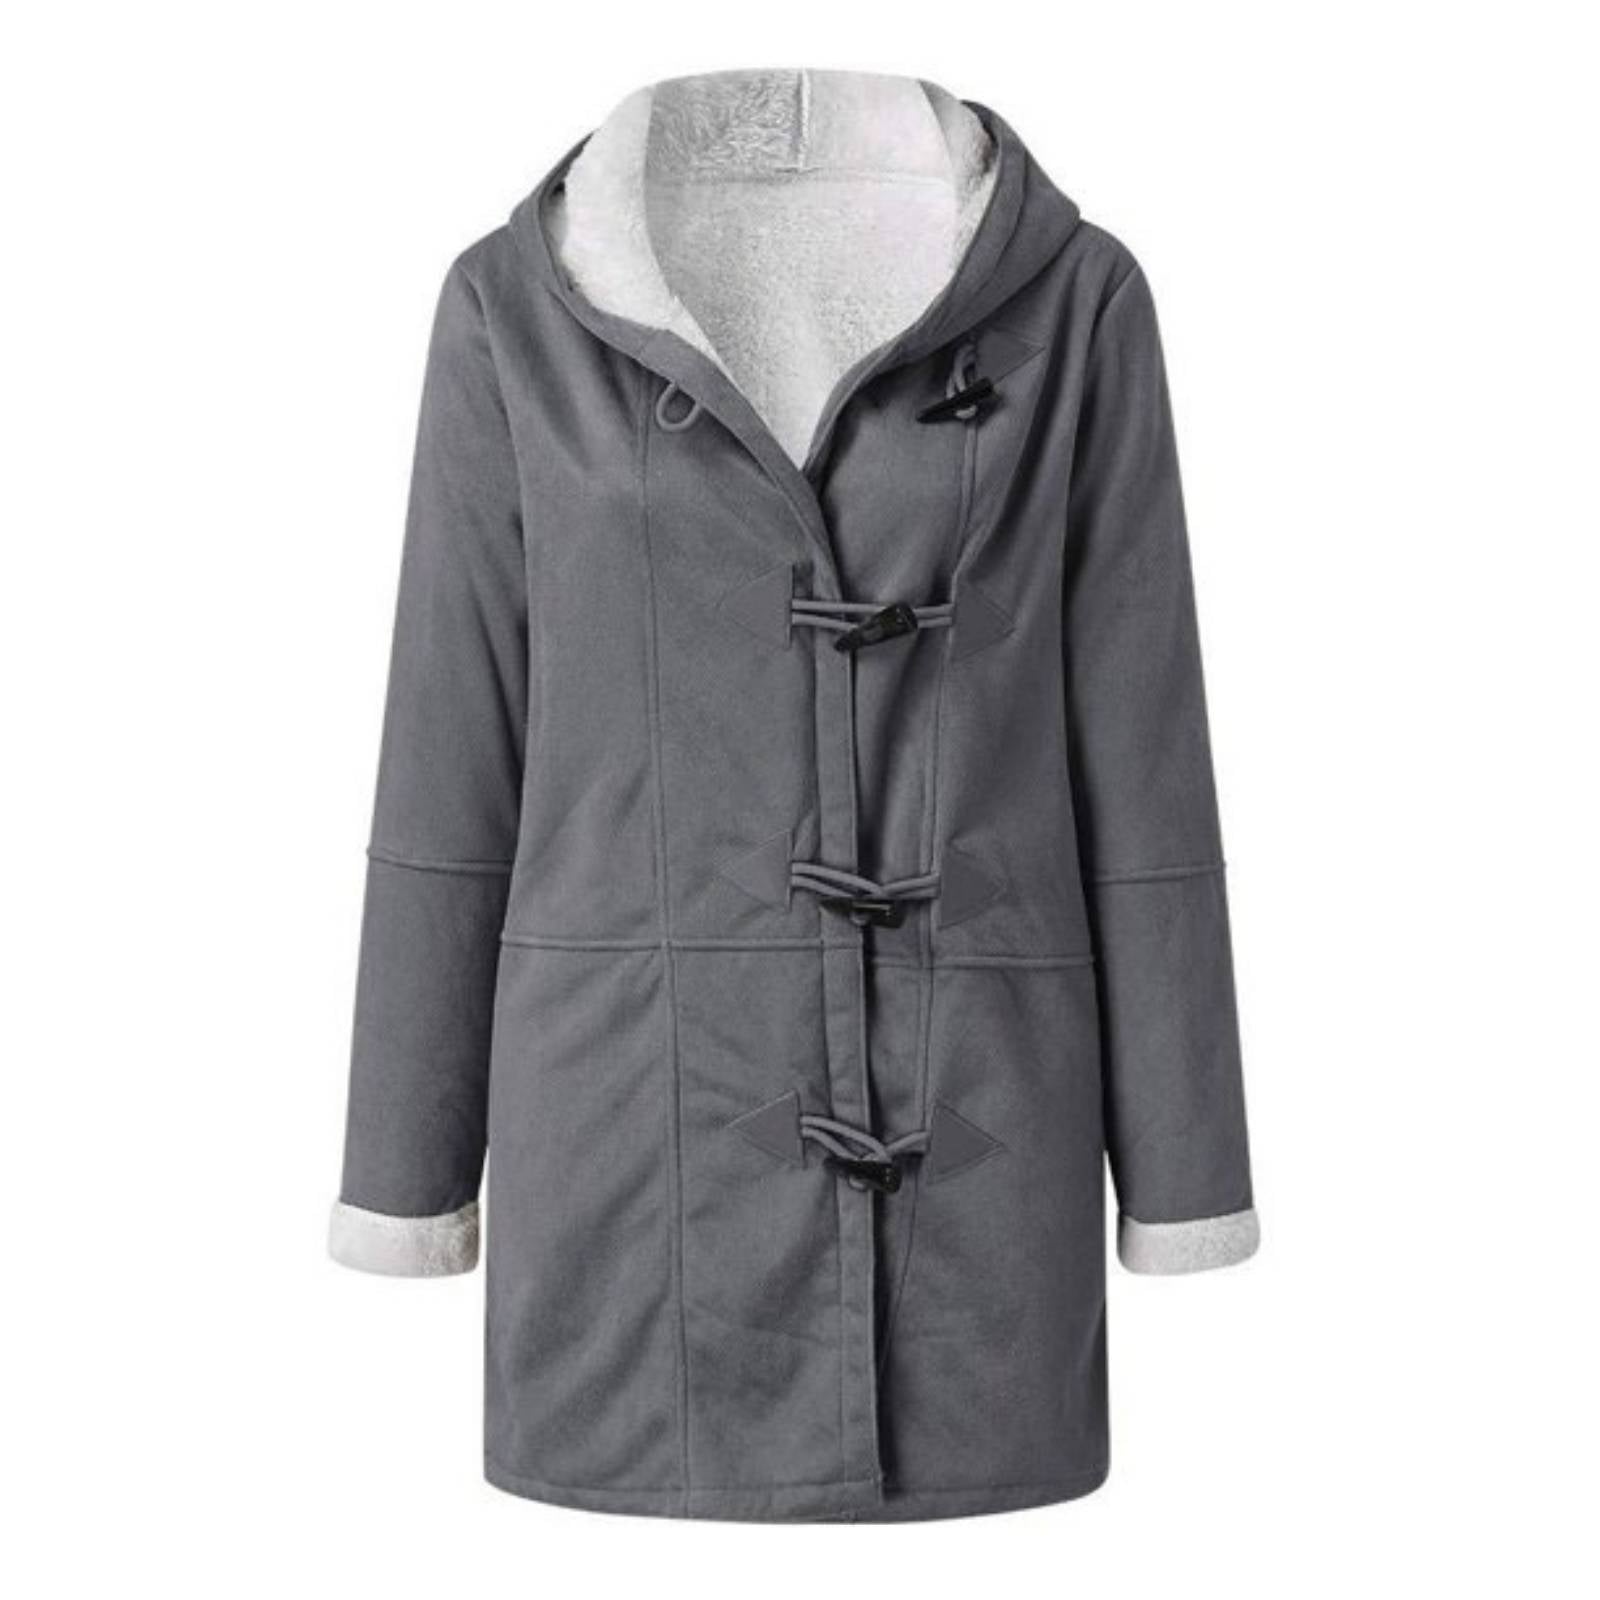 Women's Thick Warm Casula Mid-length Hooded Winter Coat Jacket | Nowena